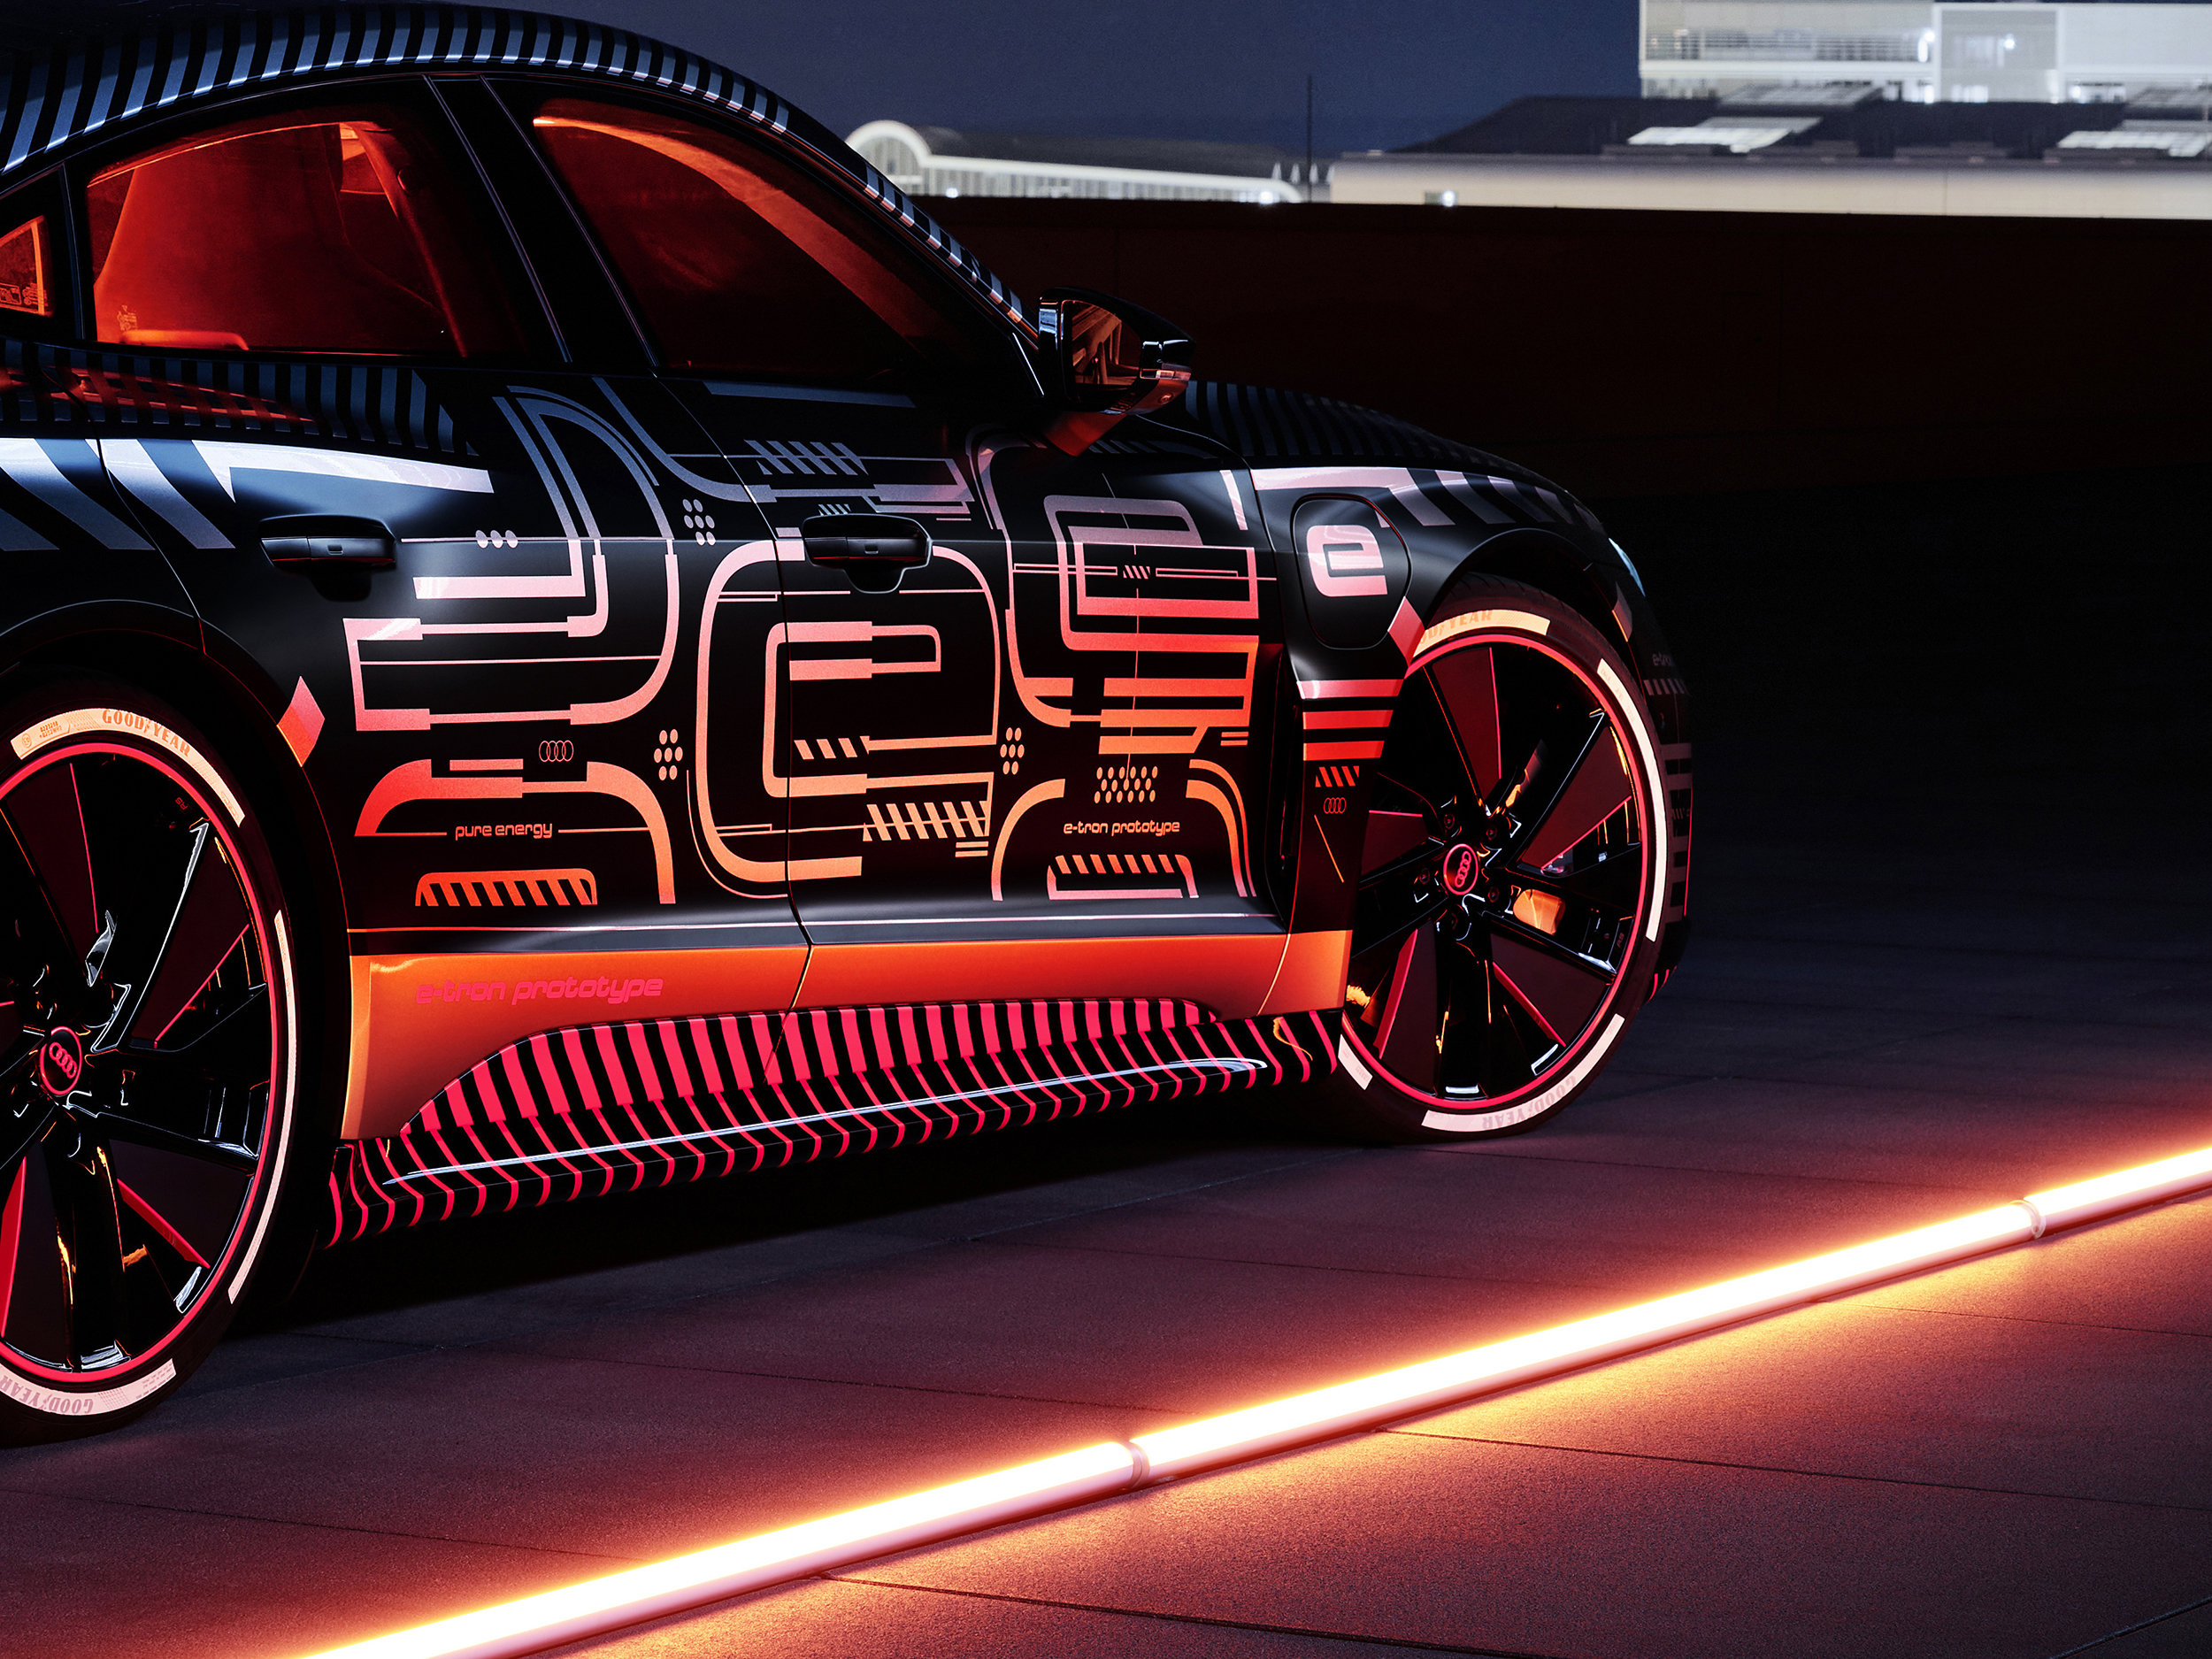 Audi E-Tron Prototype Wallpapers